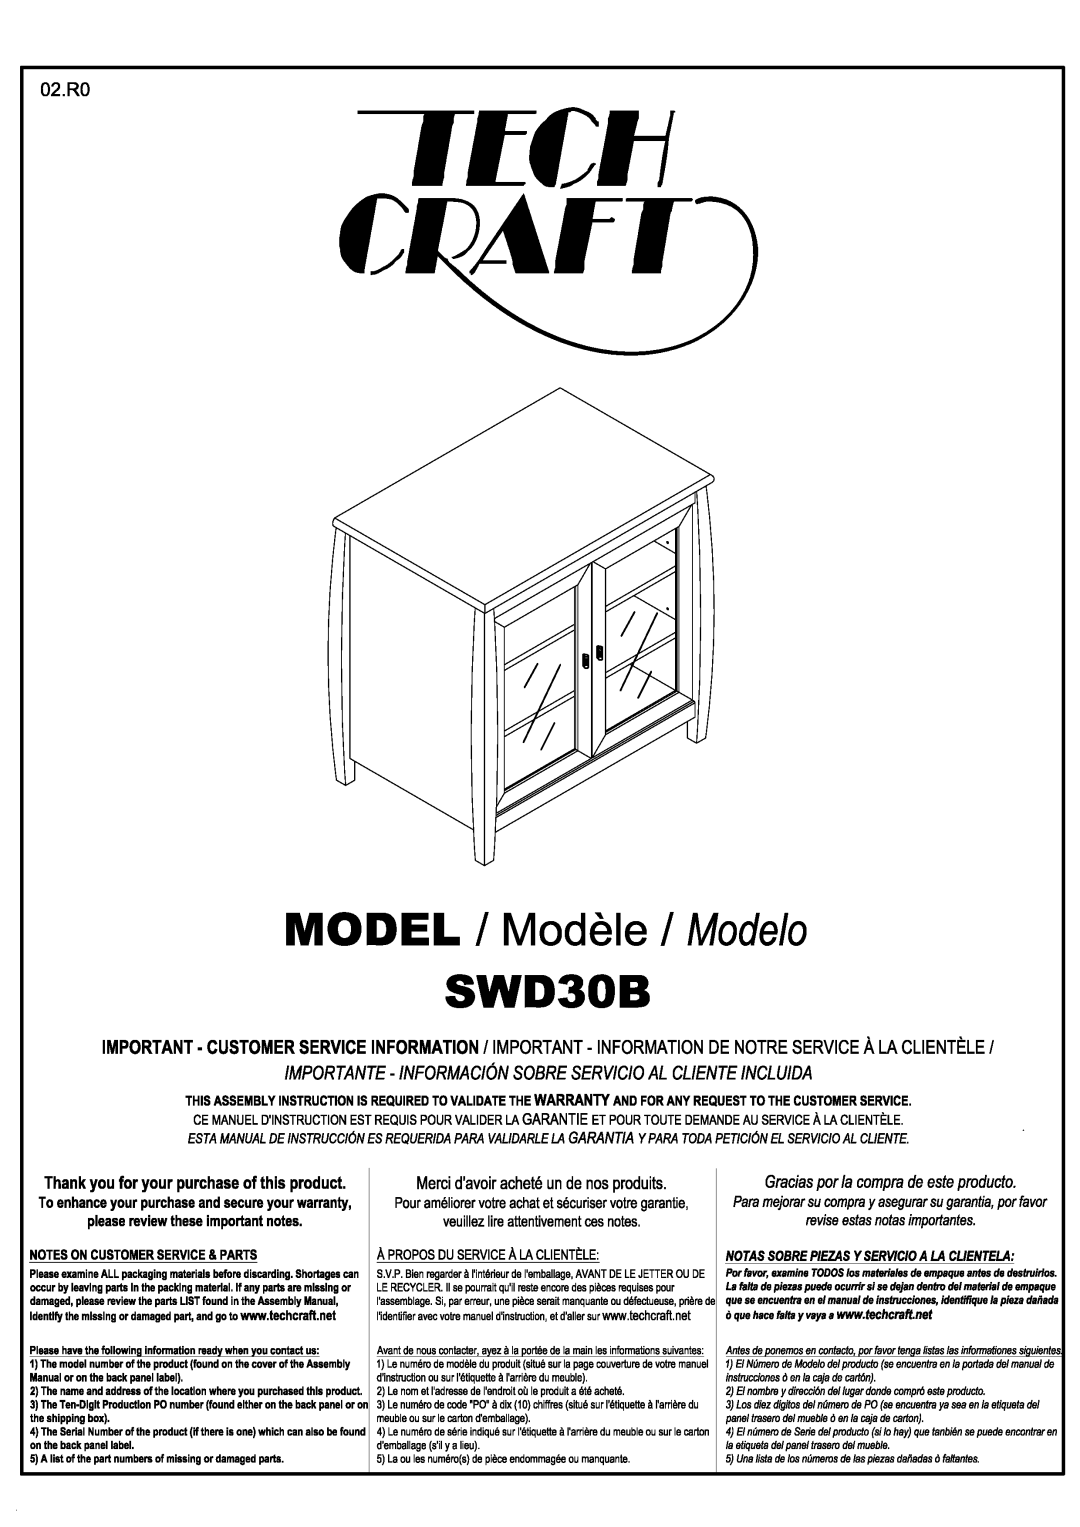 Tech Craft SWD30B manual 